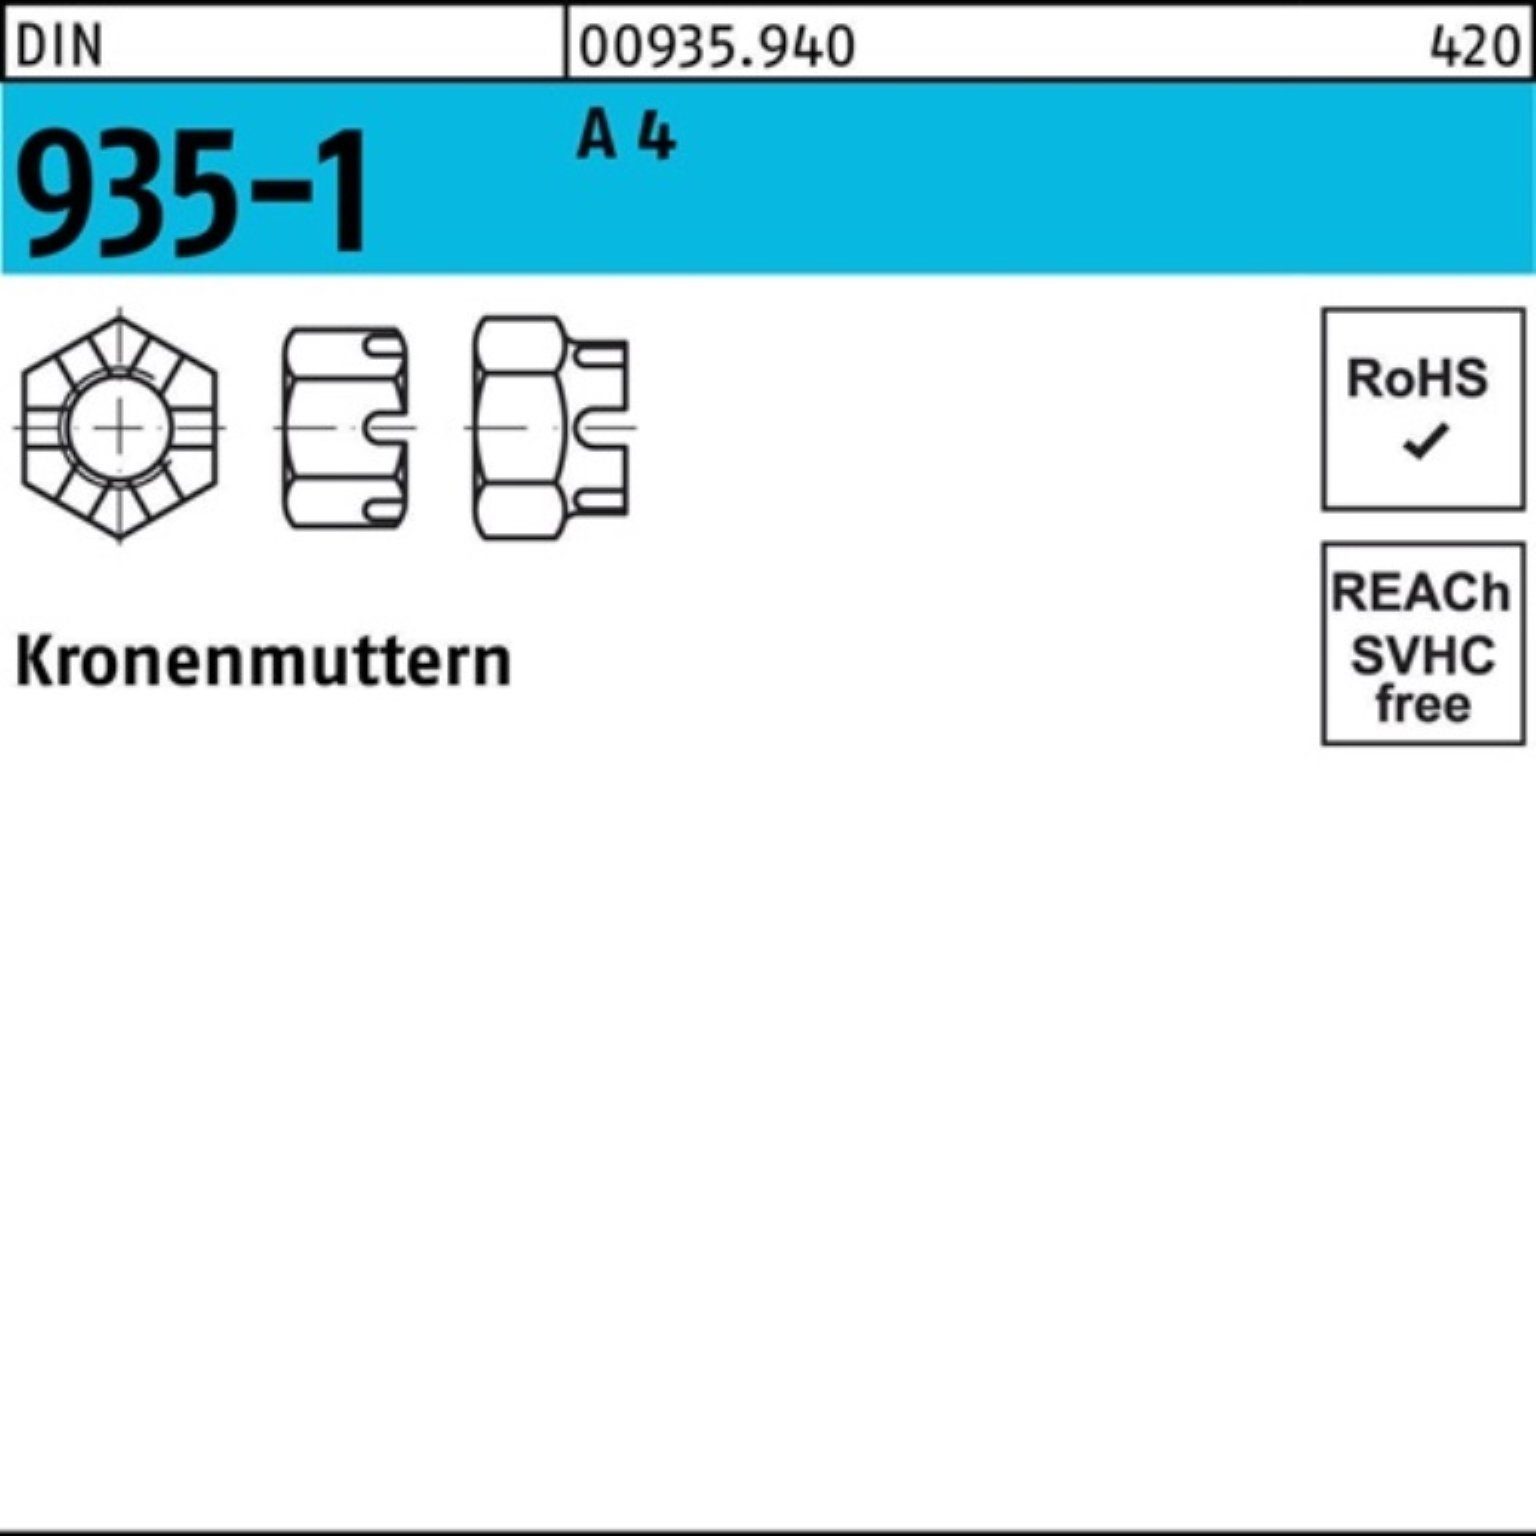 M16 Pack 4 Kronenmutter 935-1 Krone DIN Stück 1 935-1 A 4 100er A Reyher DIN Kronenmutter